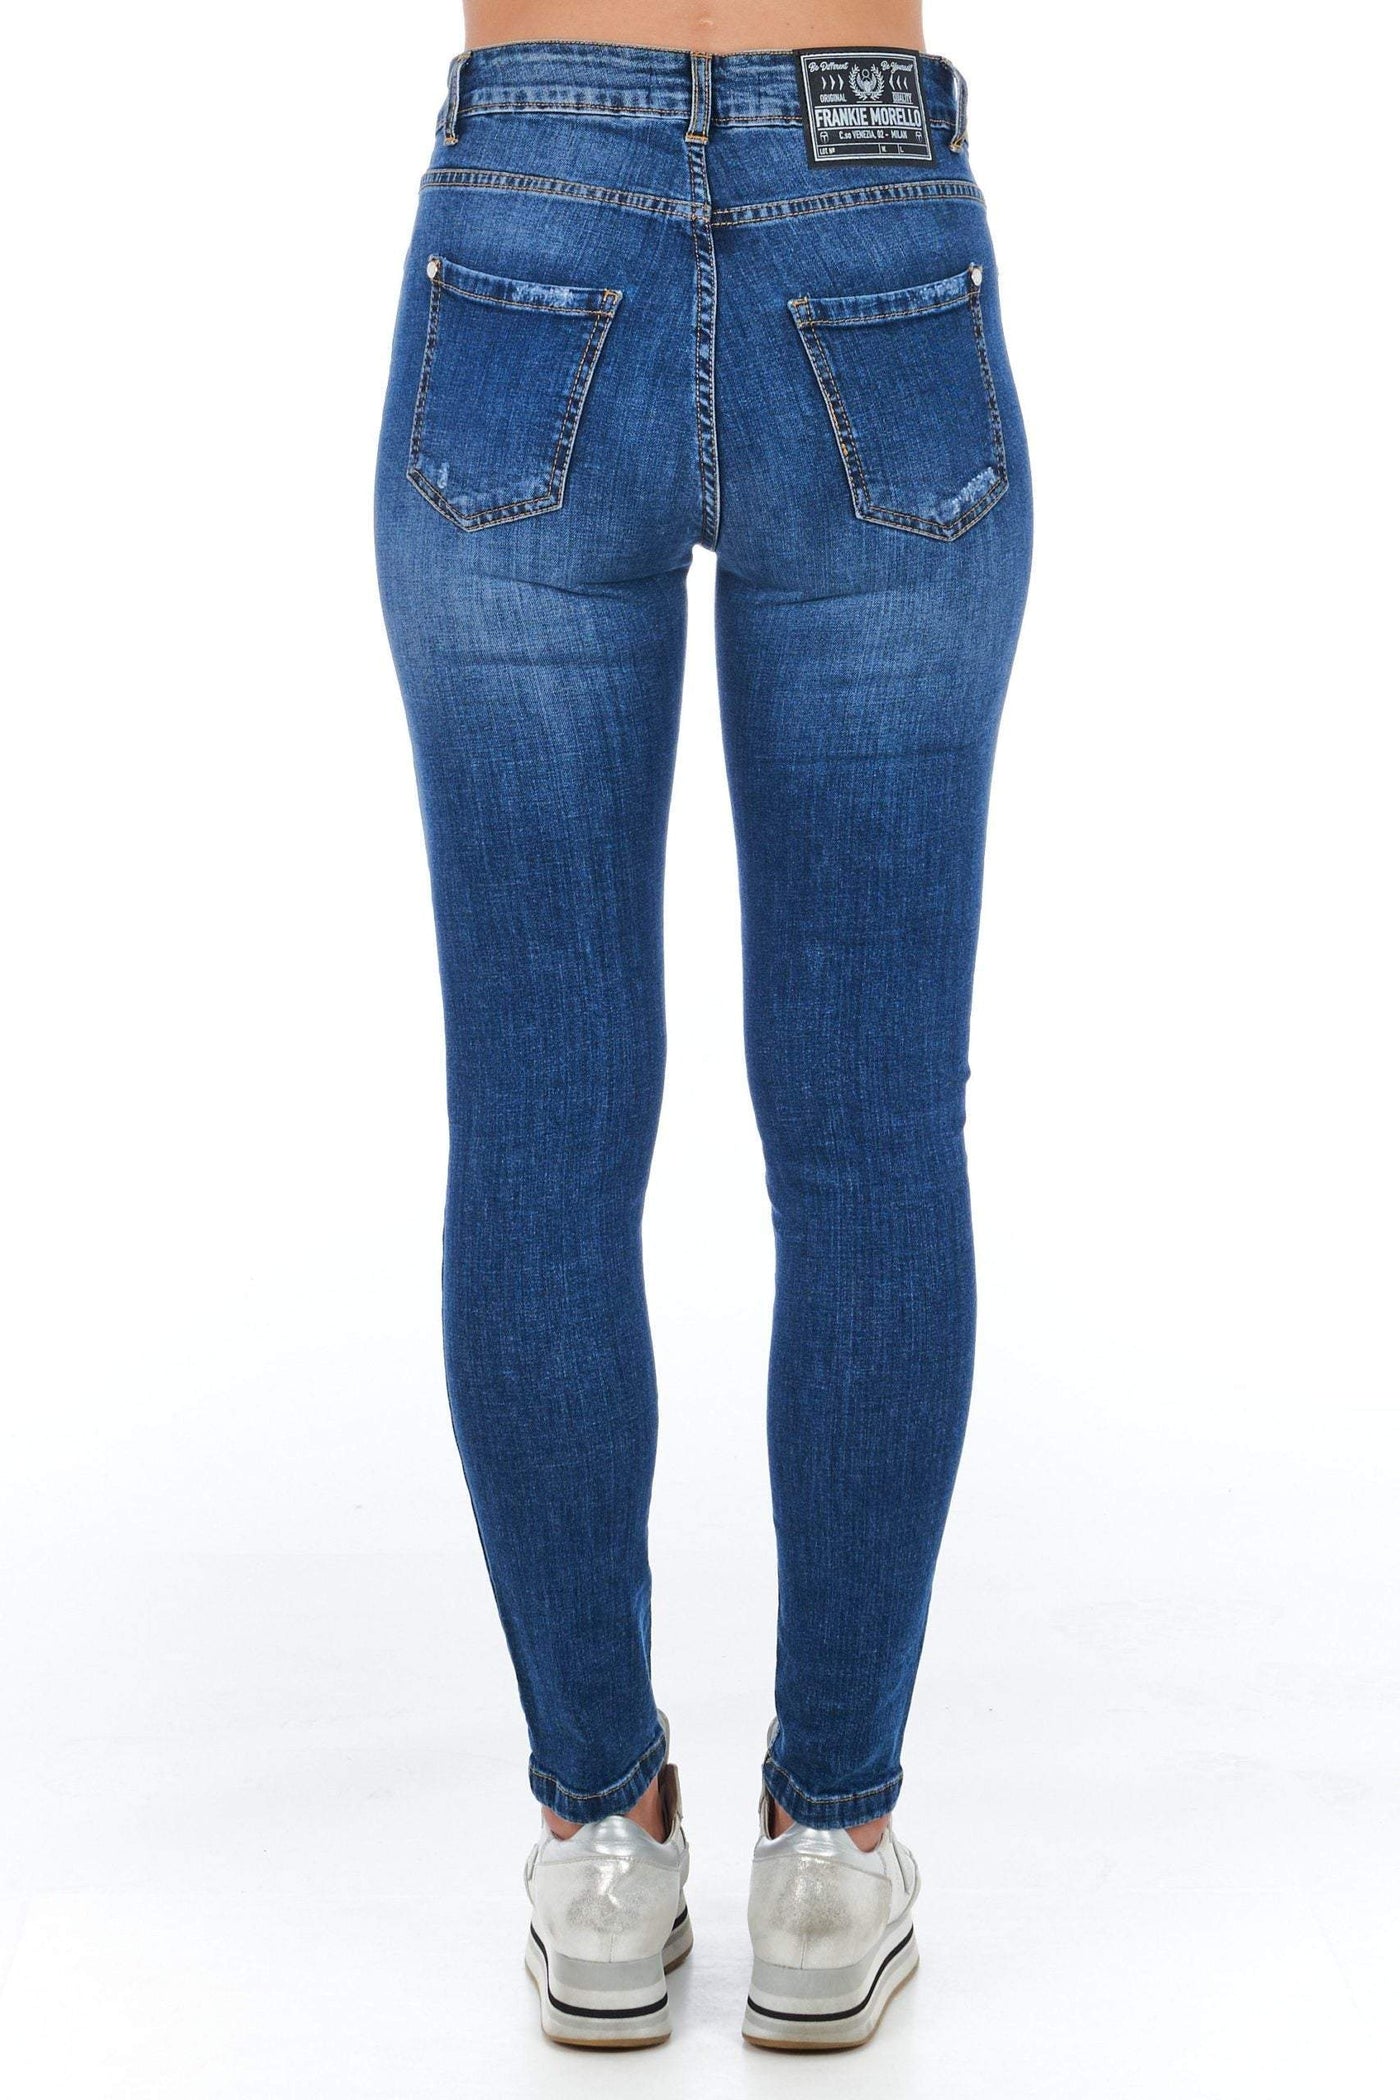 Frankie Morello Blue Jeans & Pant Blue, feed-1, Frankie Morello, Jeans & Pants - Women - Clothing, W26 | IT40, W27 | IT41, W28 | IT42, W29 | IT43, W30 | IT44 at SEYMAYKA